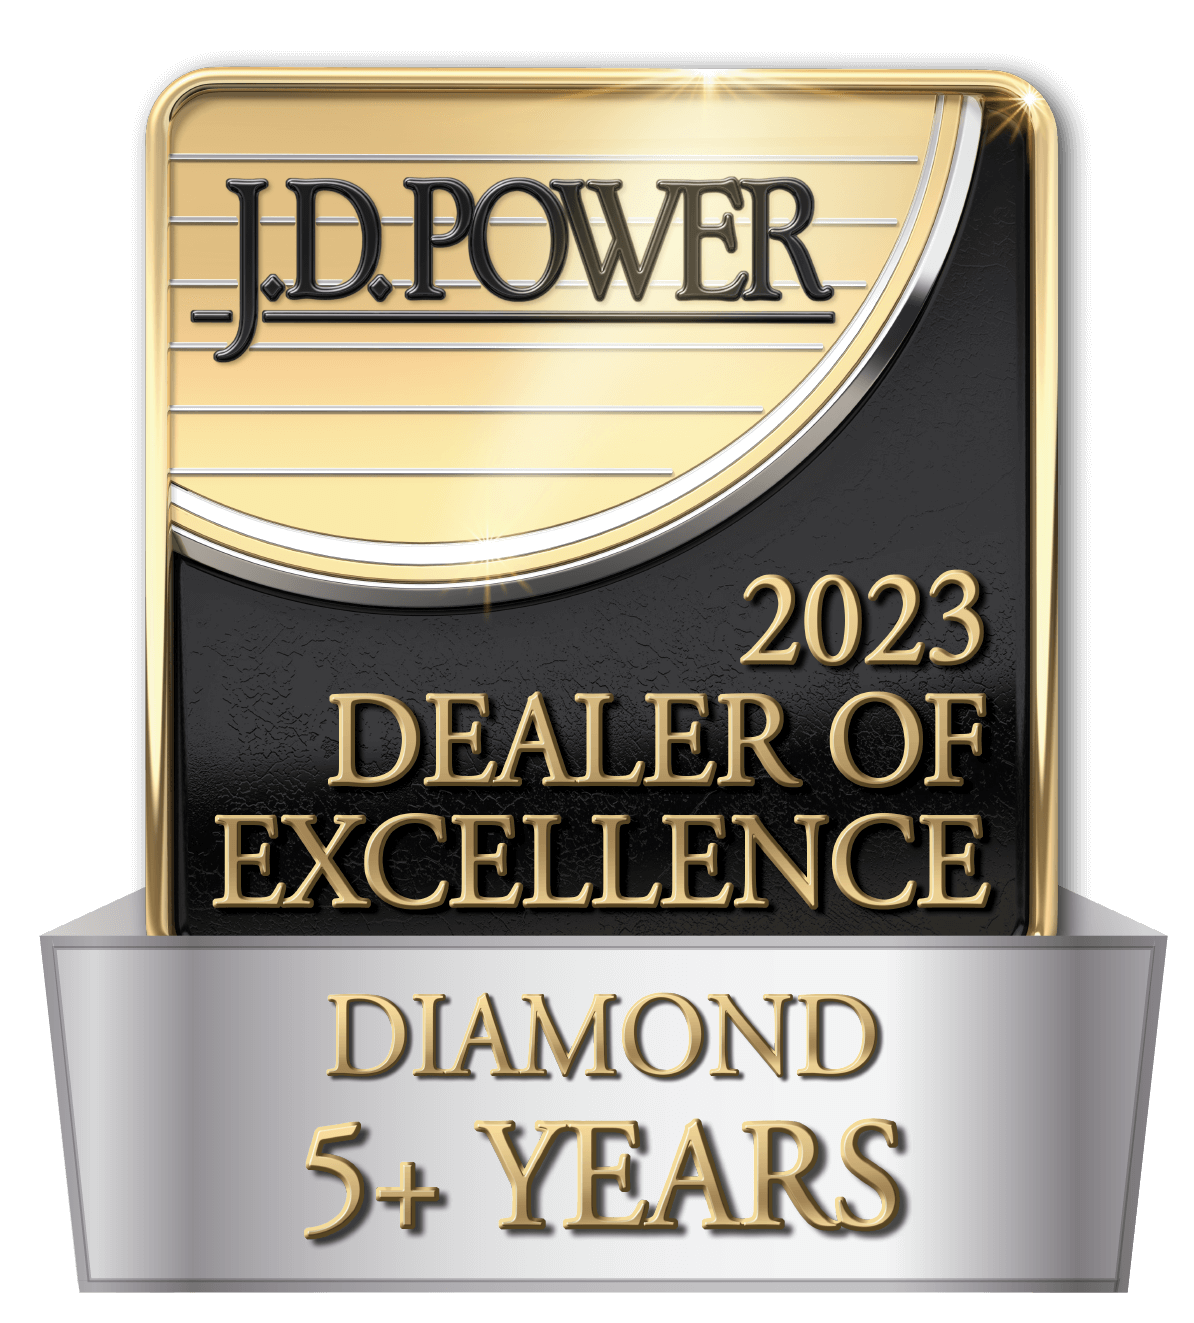 2023 JD Power Dealer of Excellence Award Diamond 5+ Years